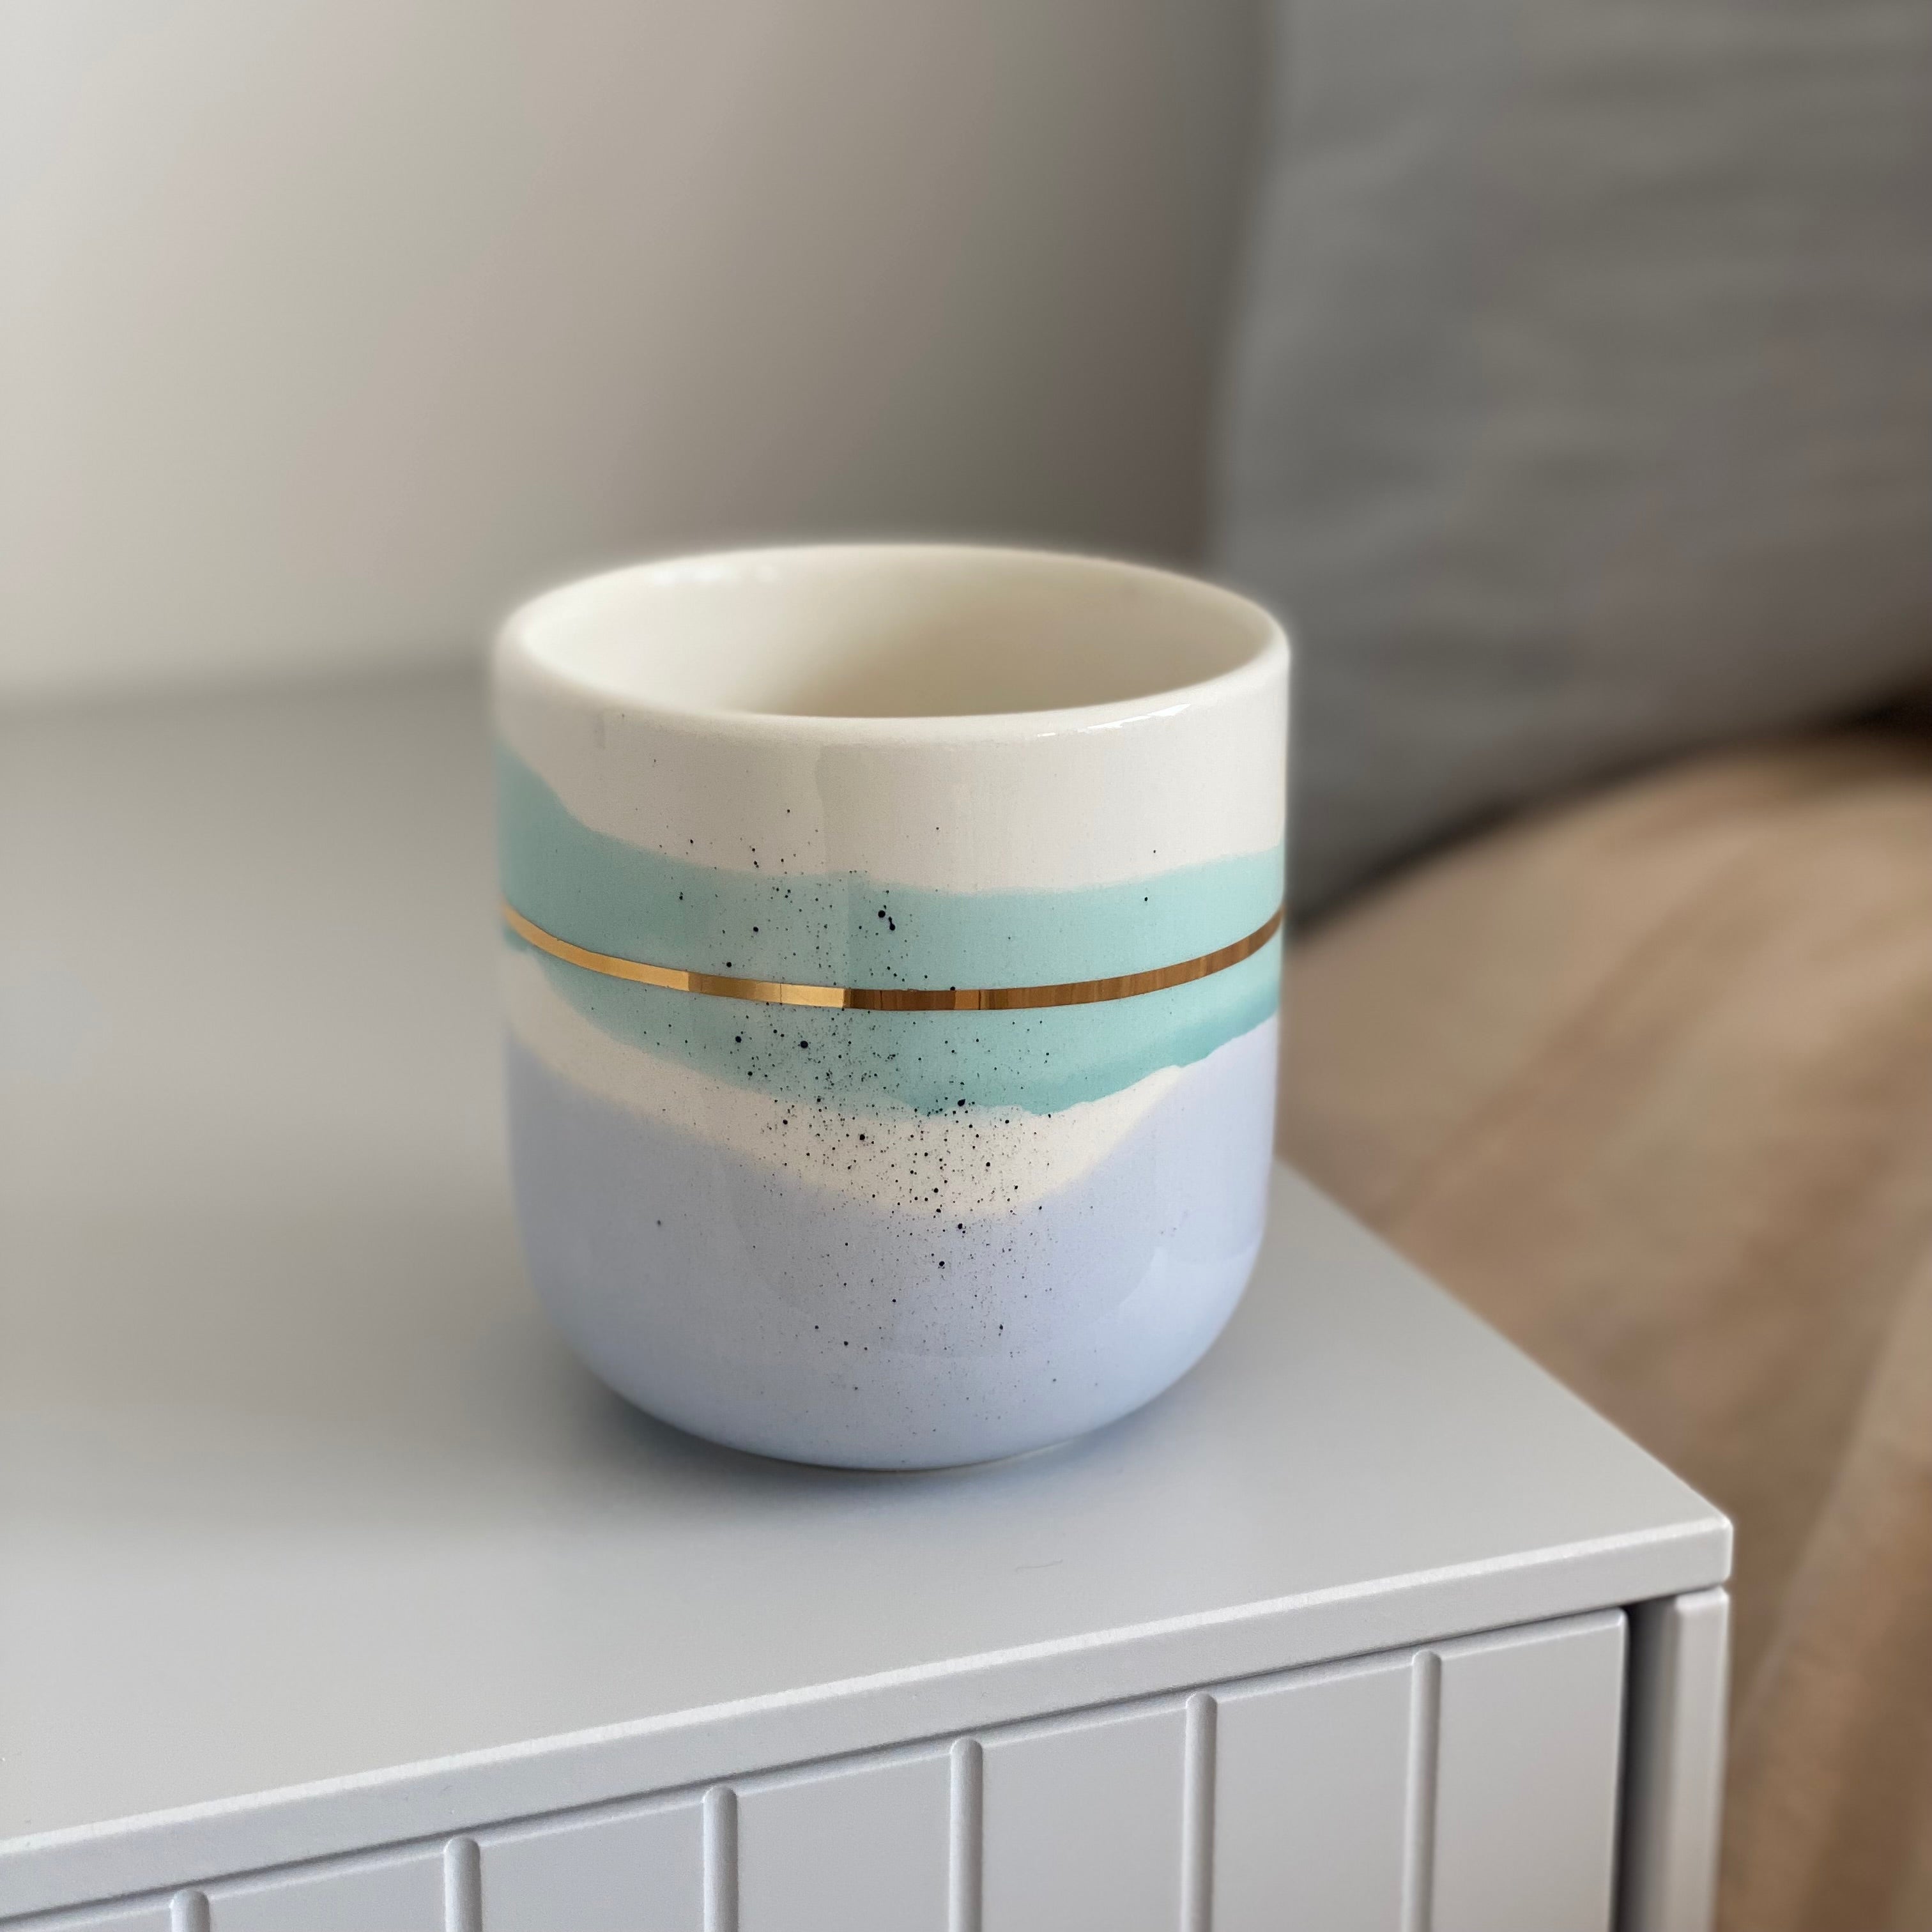 1 BACK Marinski Heartmade latte cup Landscape - light celestial blue and dusty mint